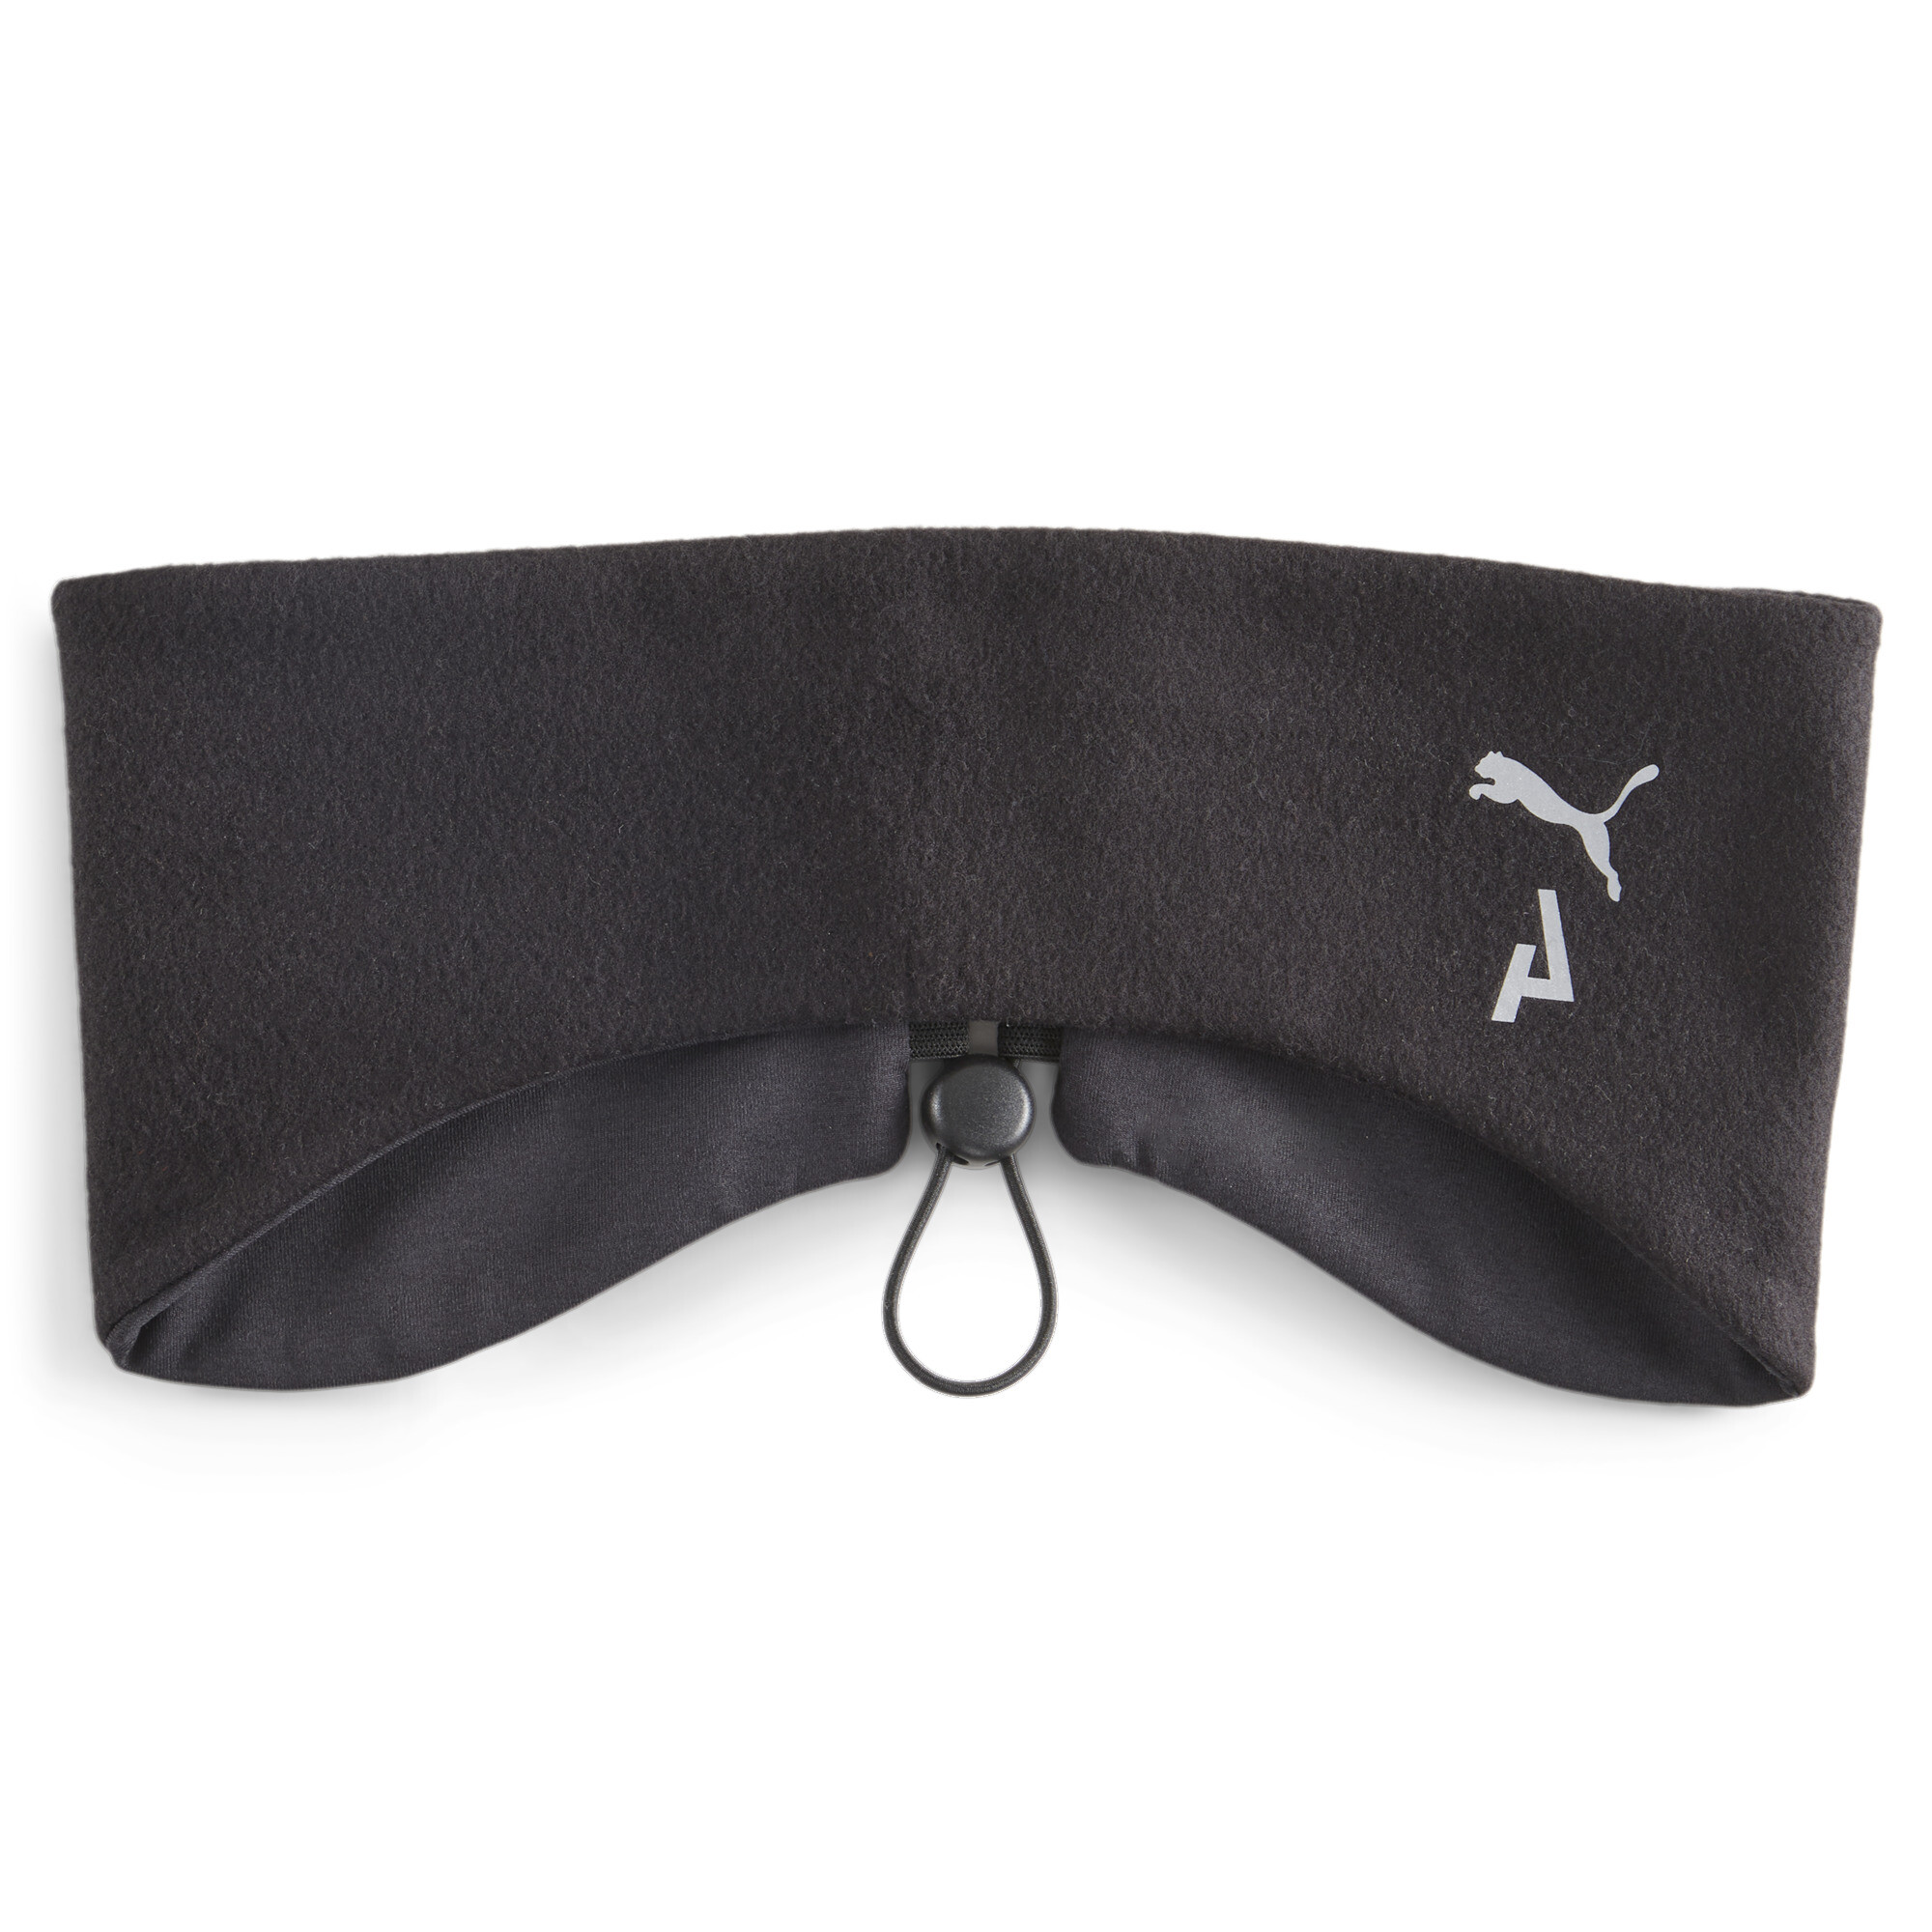 Puma SEASONS Reversible Running Headband, Black, Size Adult, Accessories